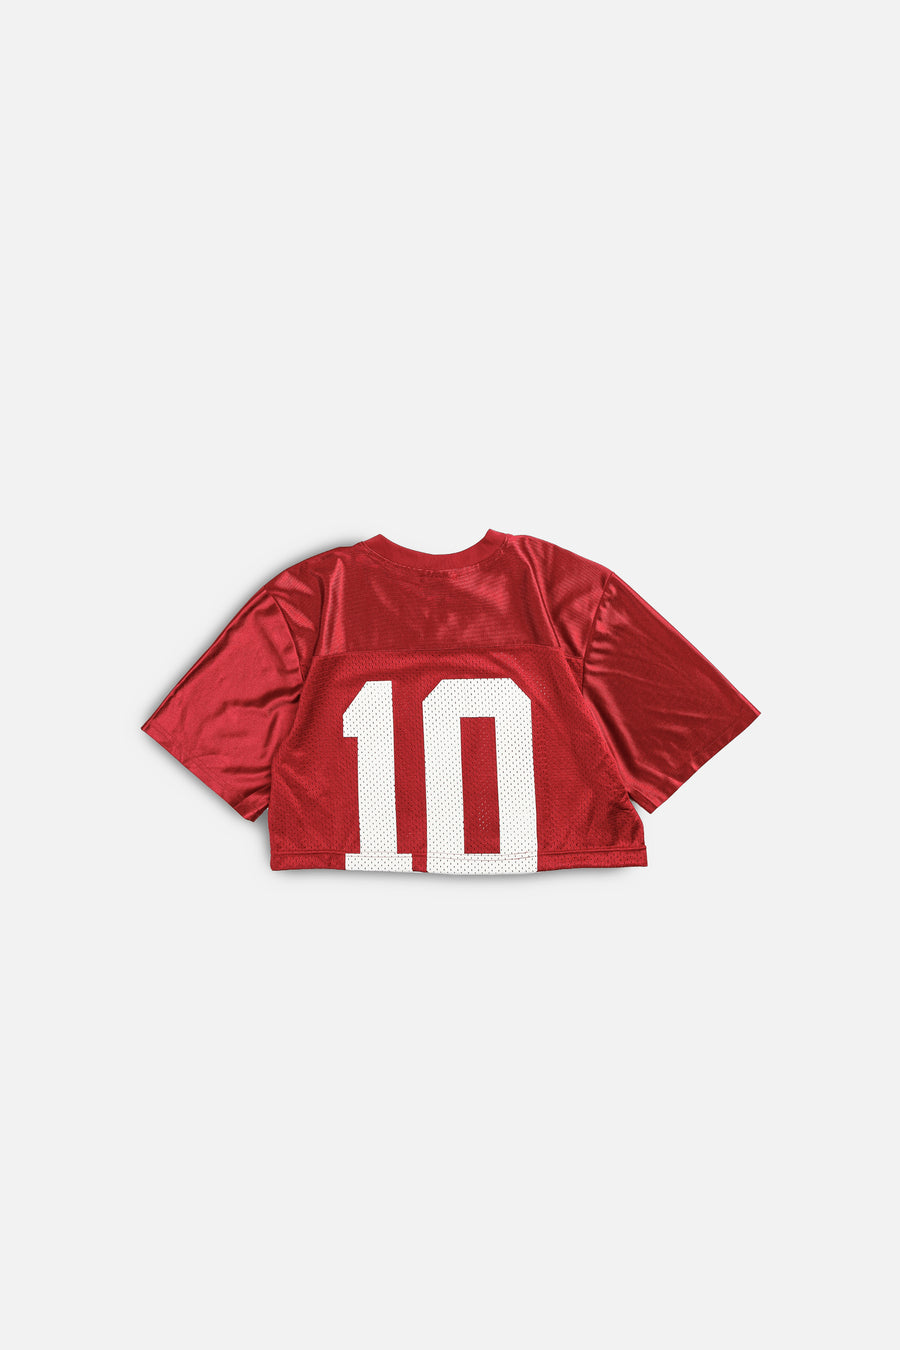 Rework Crop Alabama Crimson Tide Football Jersey - XS